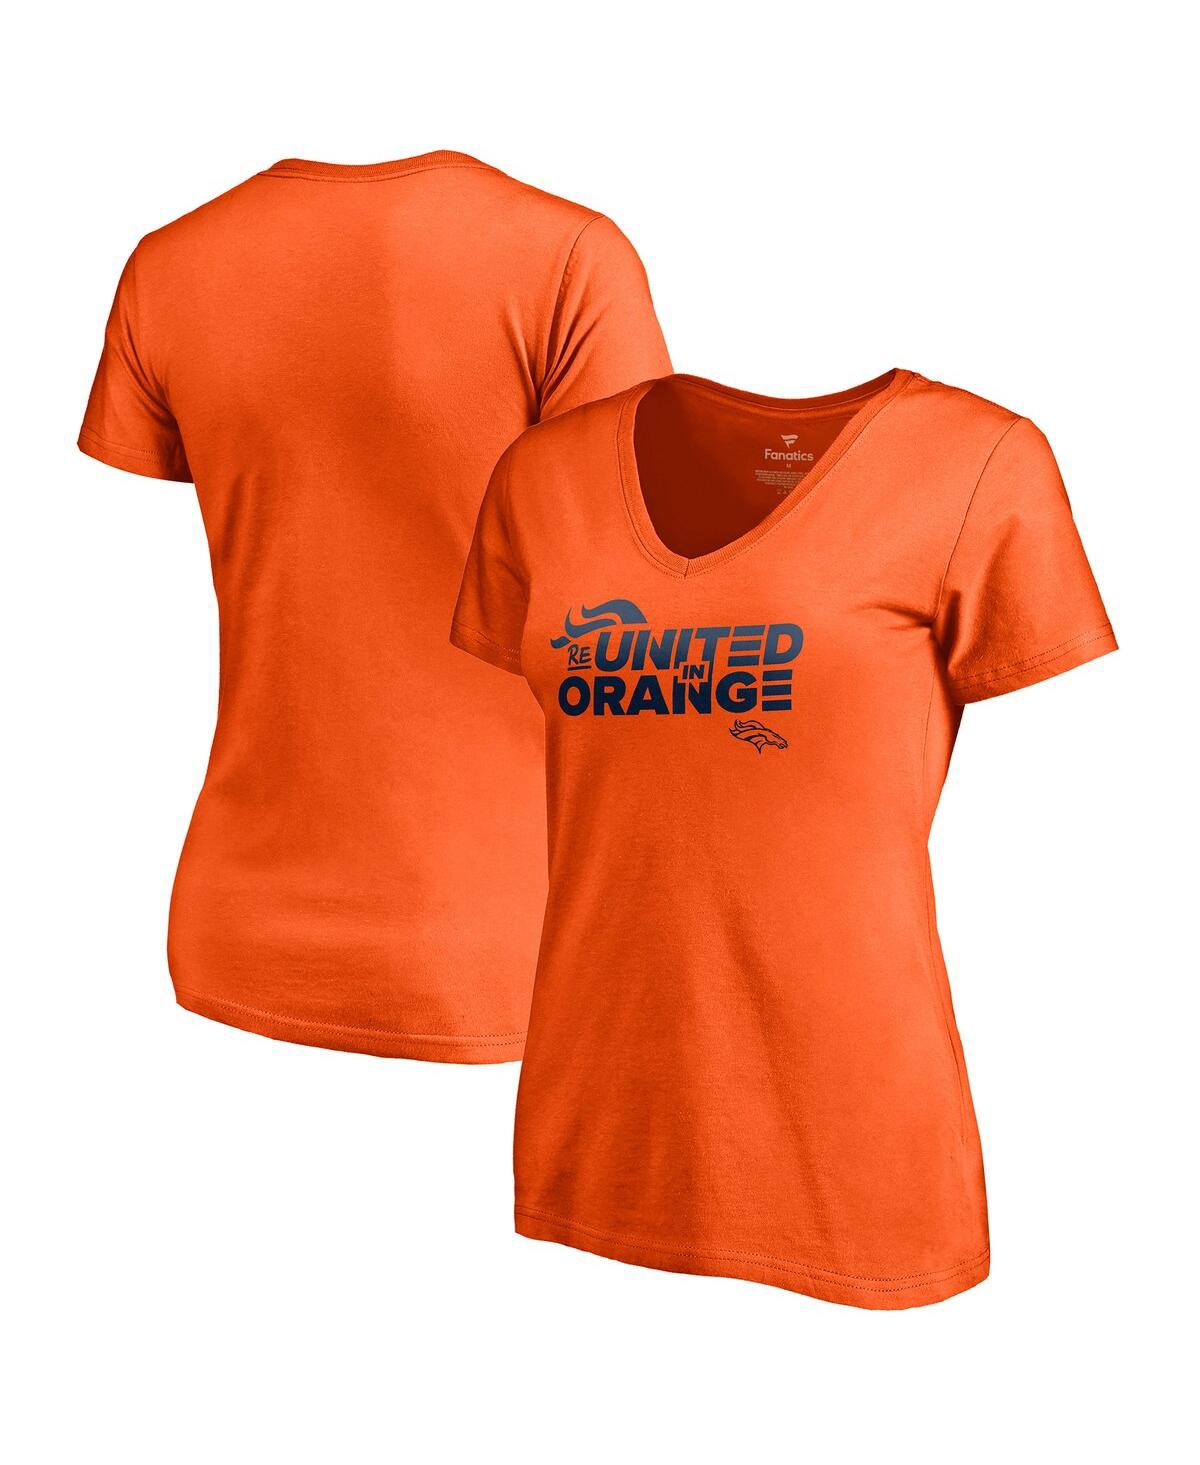 Shop Fanatics Women's  Orange Denver Broncos Reunited In Orange V-neck T-shirt